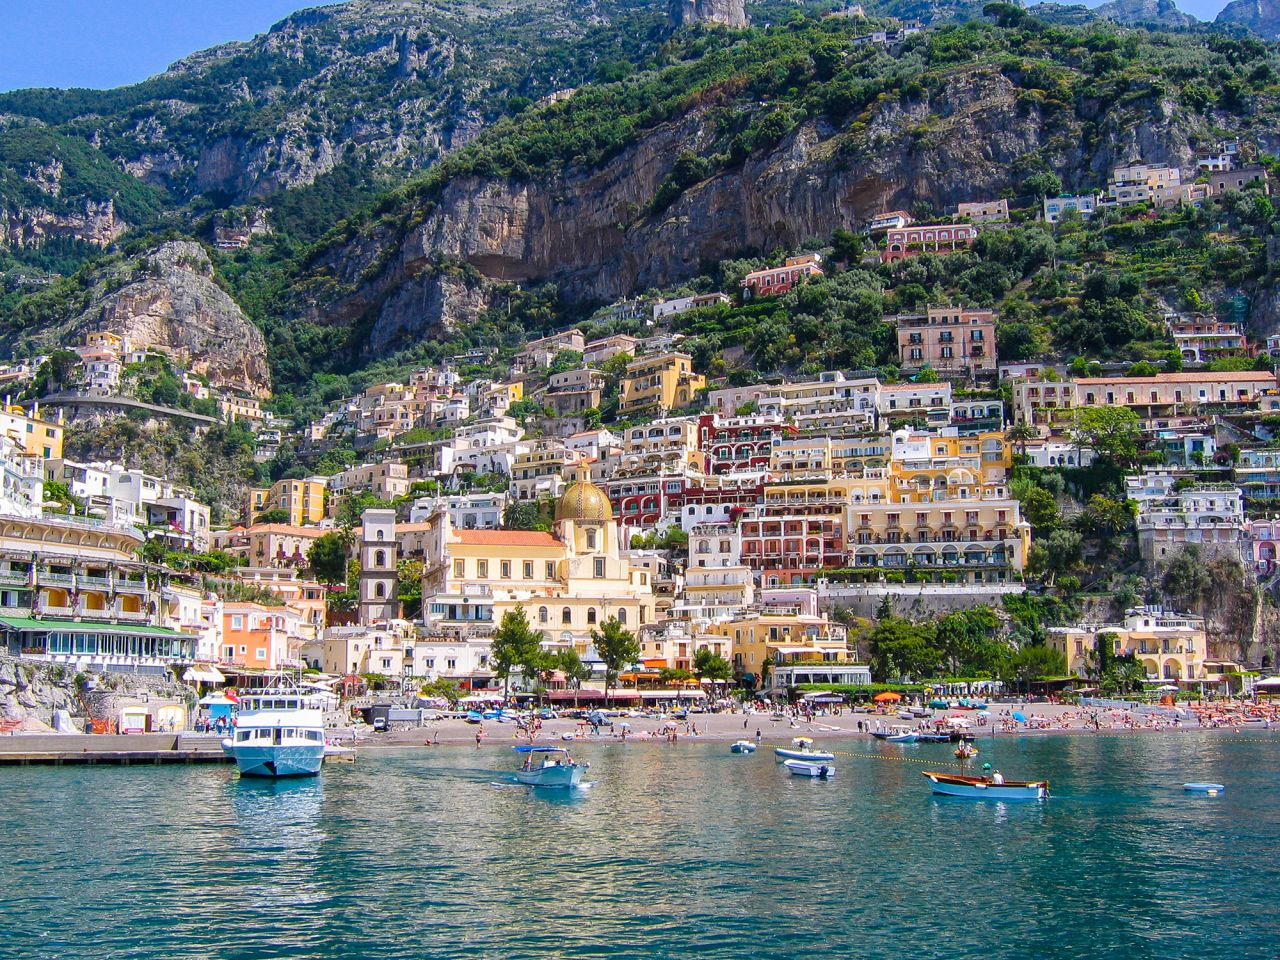 The Amalfi Coast just brought in a traffic ban | CNN